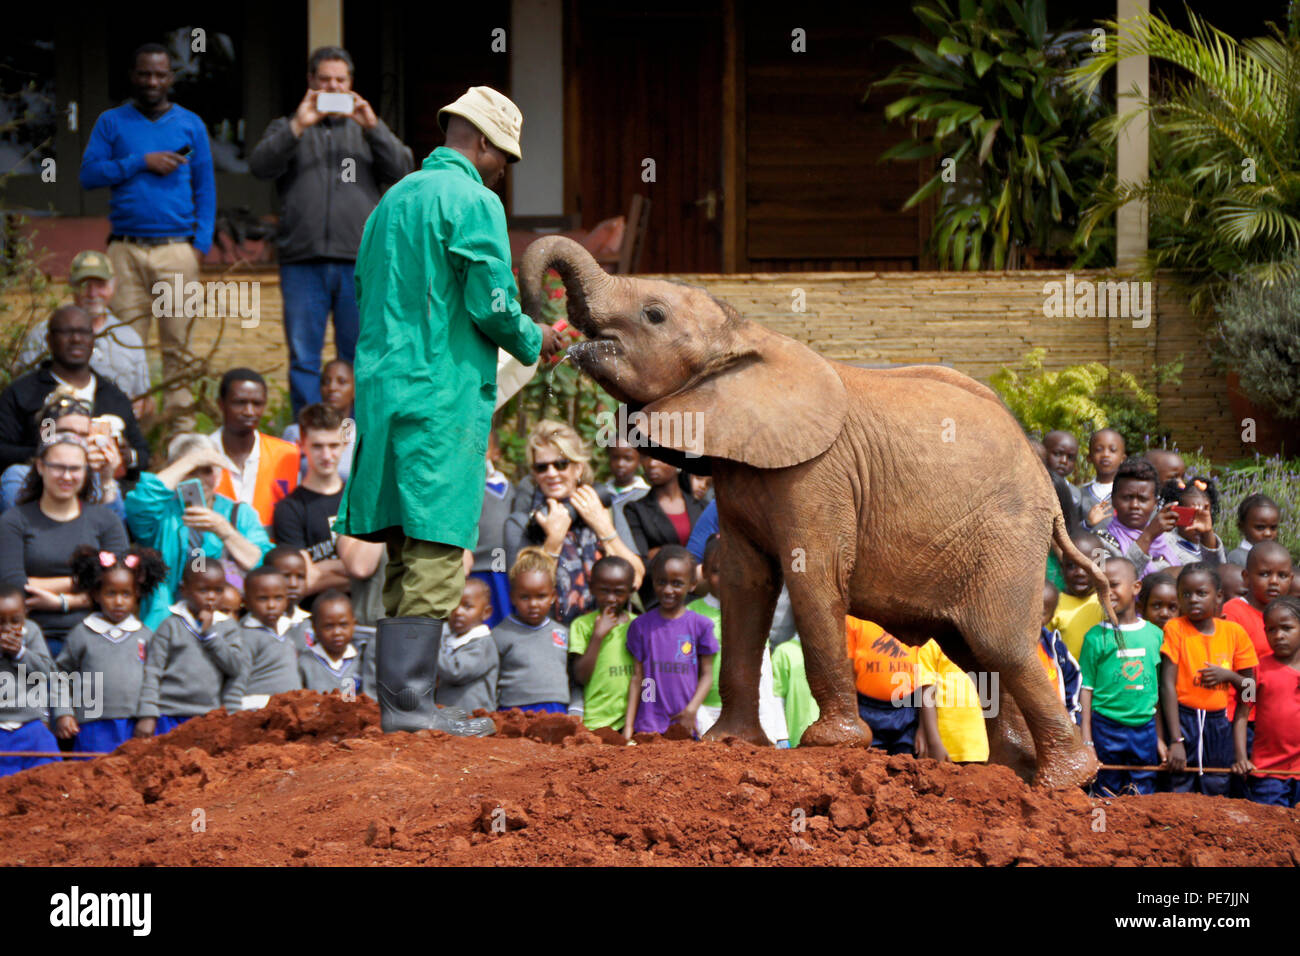 Caretaker giving milk to orphaned baby elephant, Sheldrick Wildlife Trust, Nairobi, Kenya Stock Photo